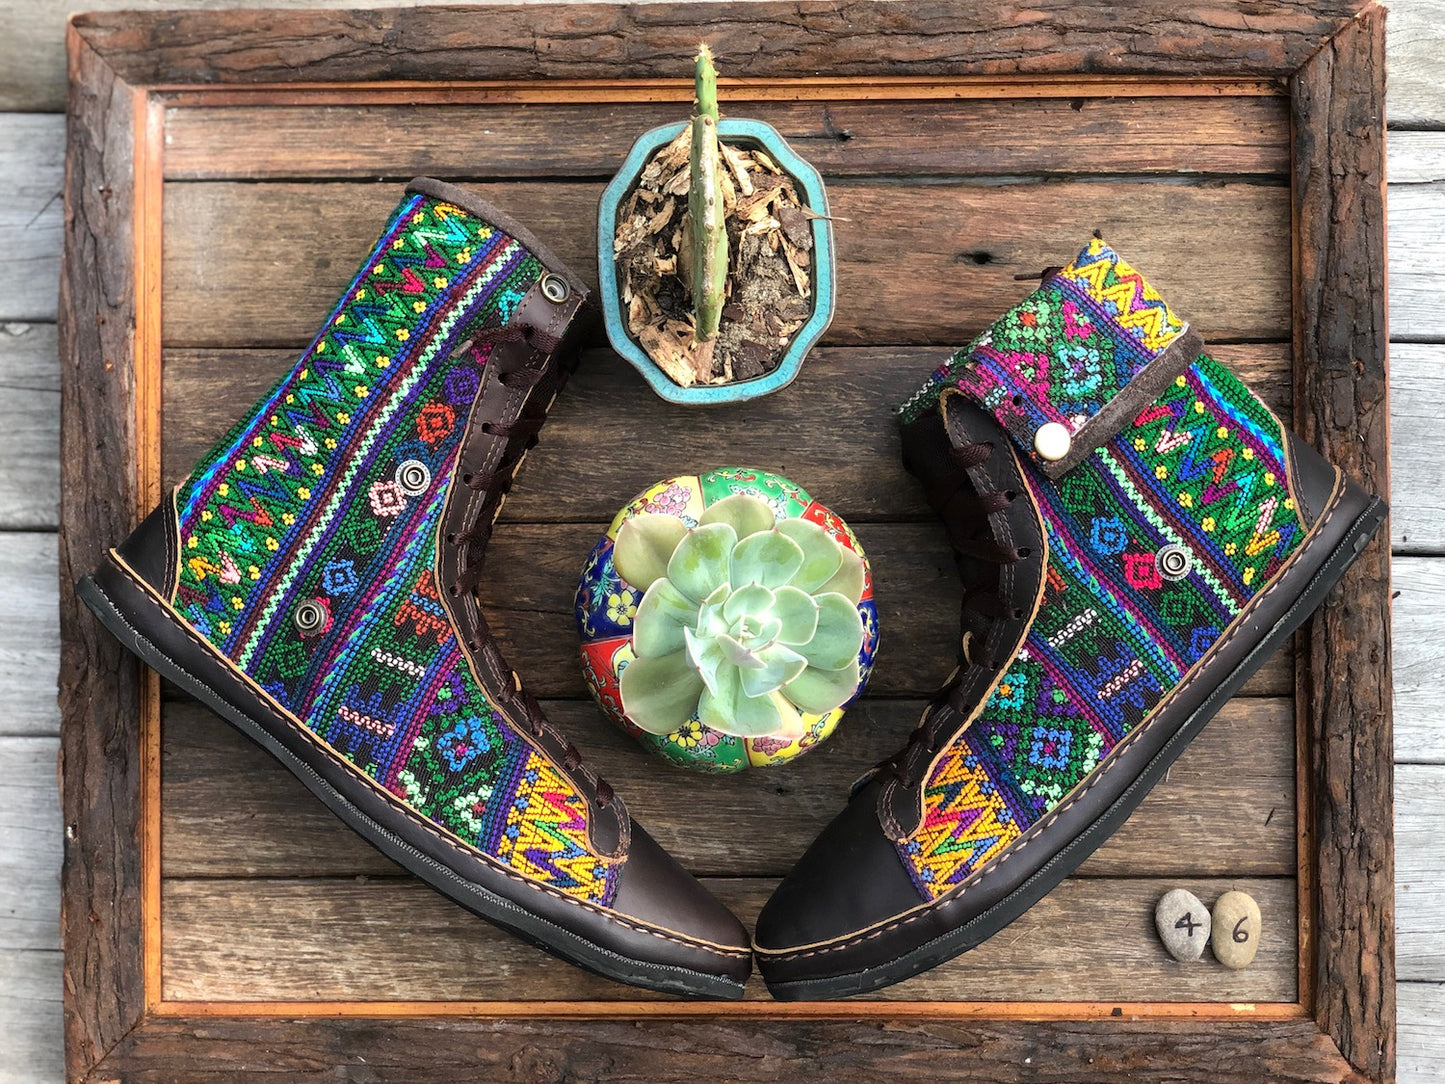 Size 46 - Fold down Desert Boots Rainbow Gardener